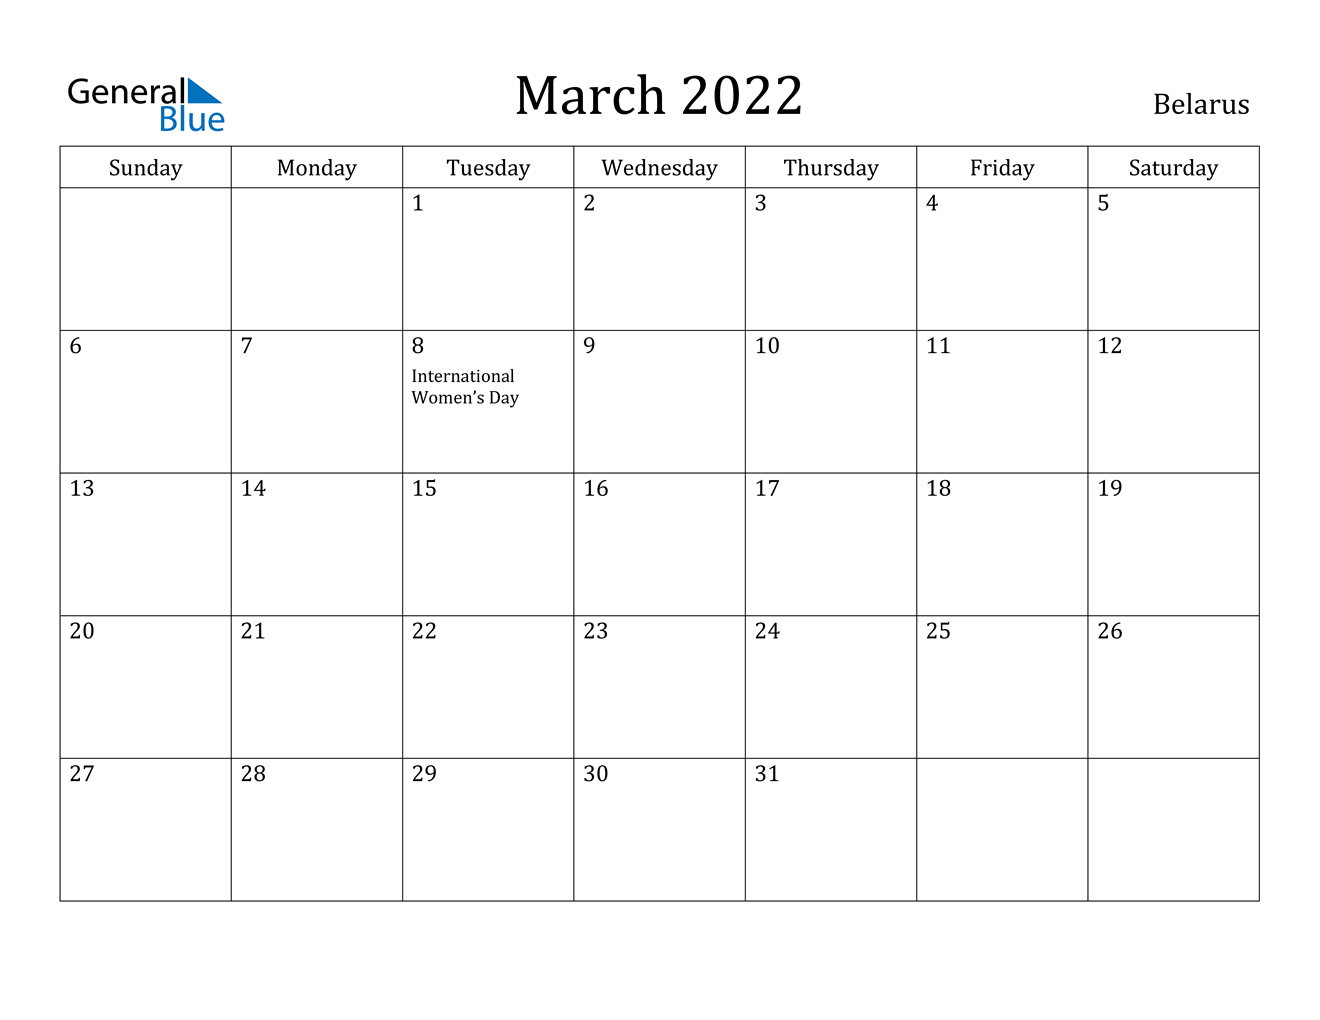 March 2022 Calendar - Belarus